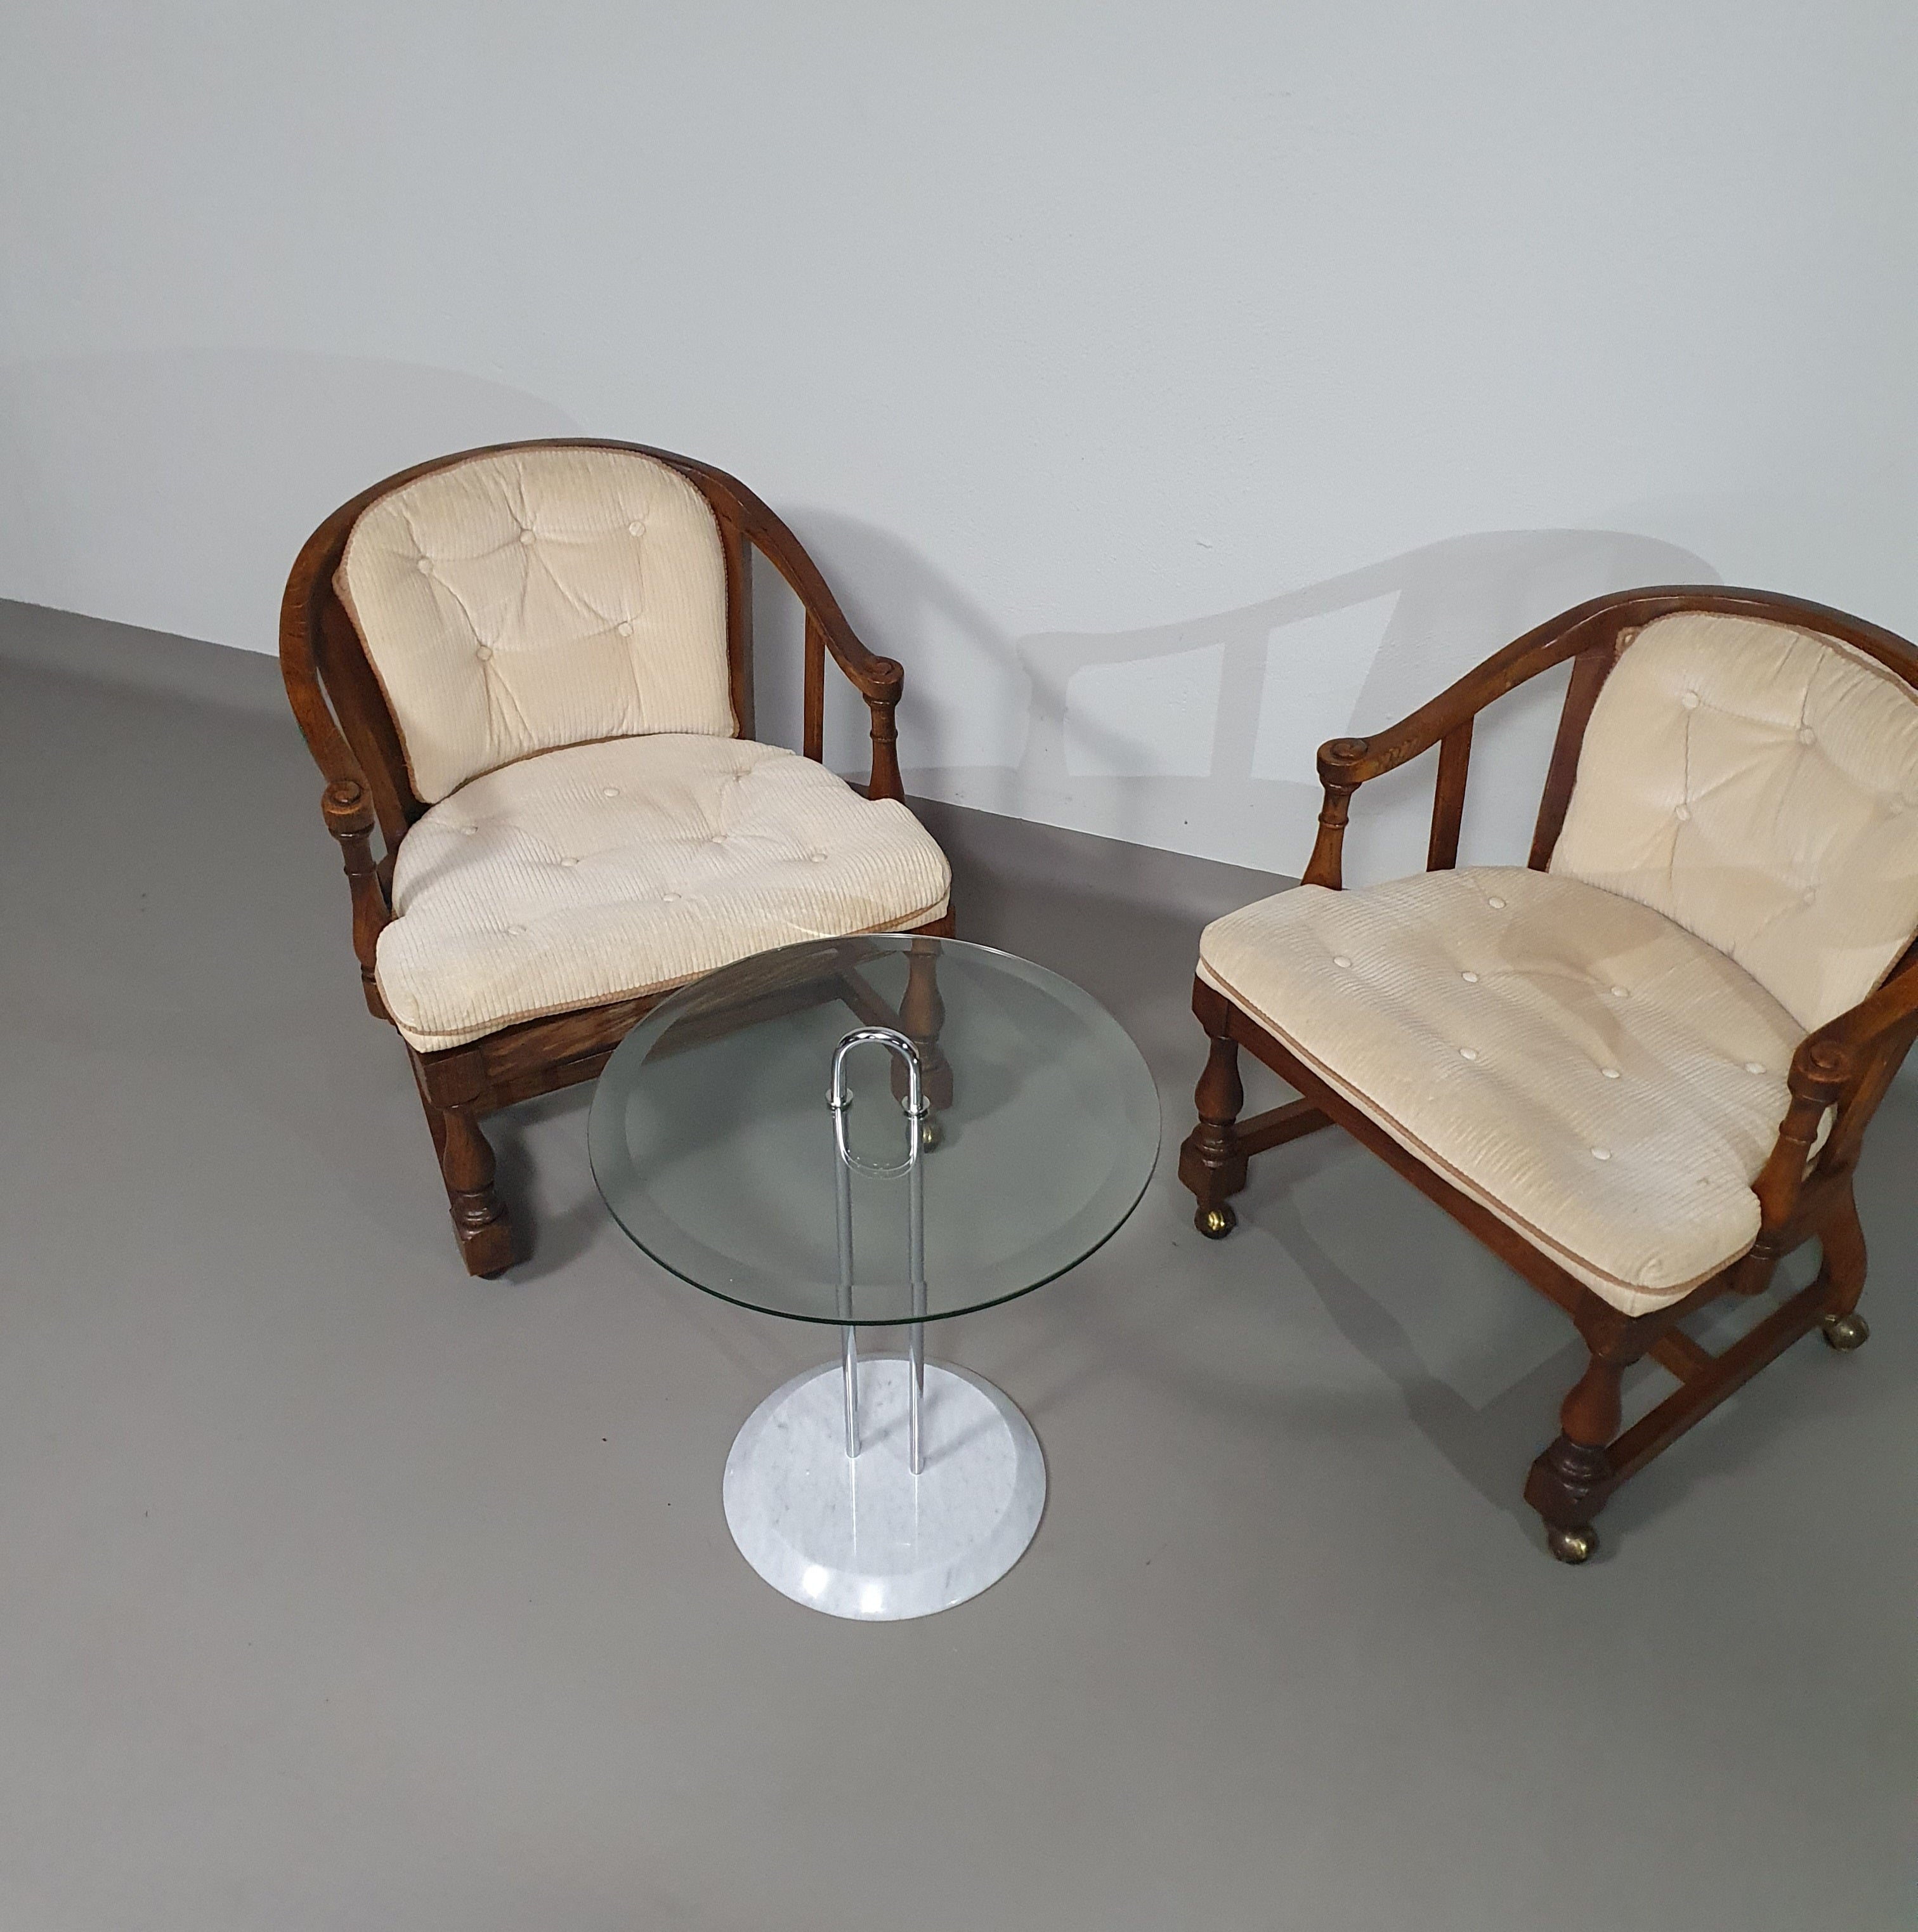 2 x armchairs Drexel Heritage Furnishings Inc. USA By Shirley Bracket.